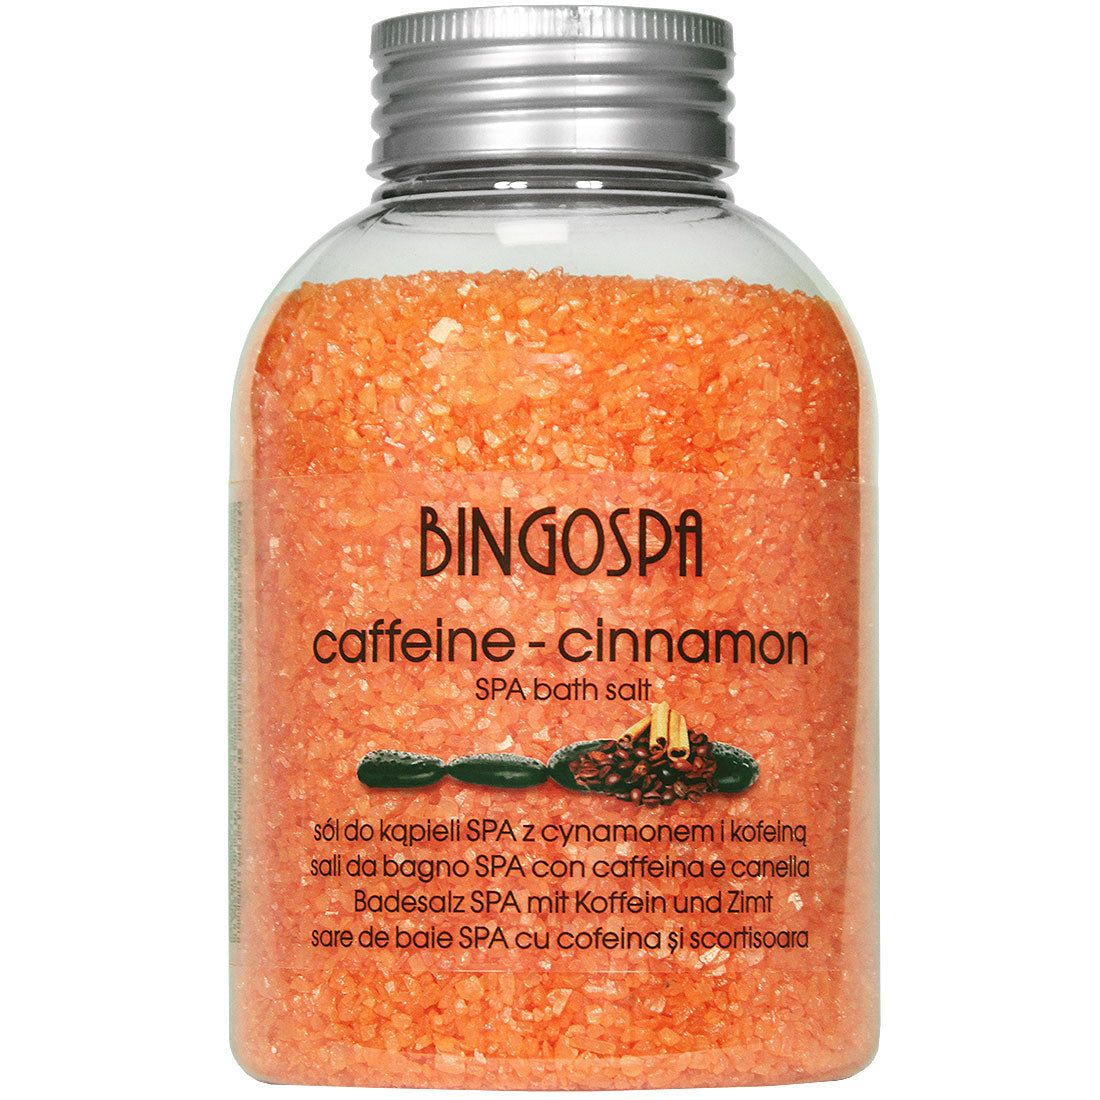 Sól do kąpieli SPA cynamon kofeina BINGOSPA